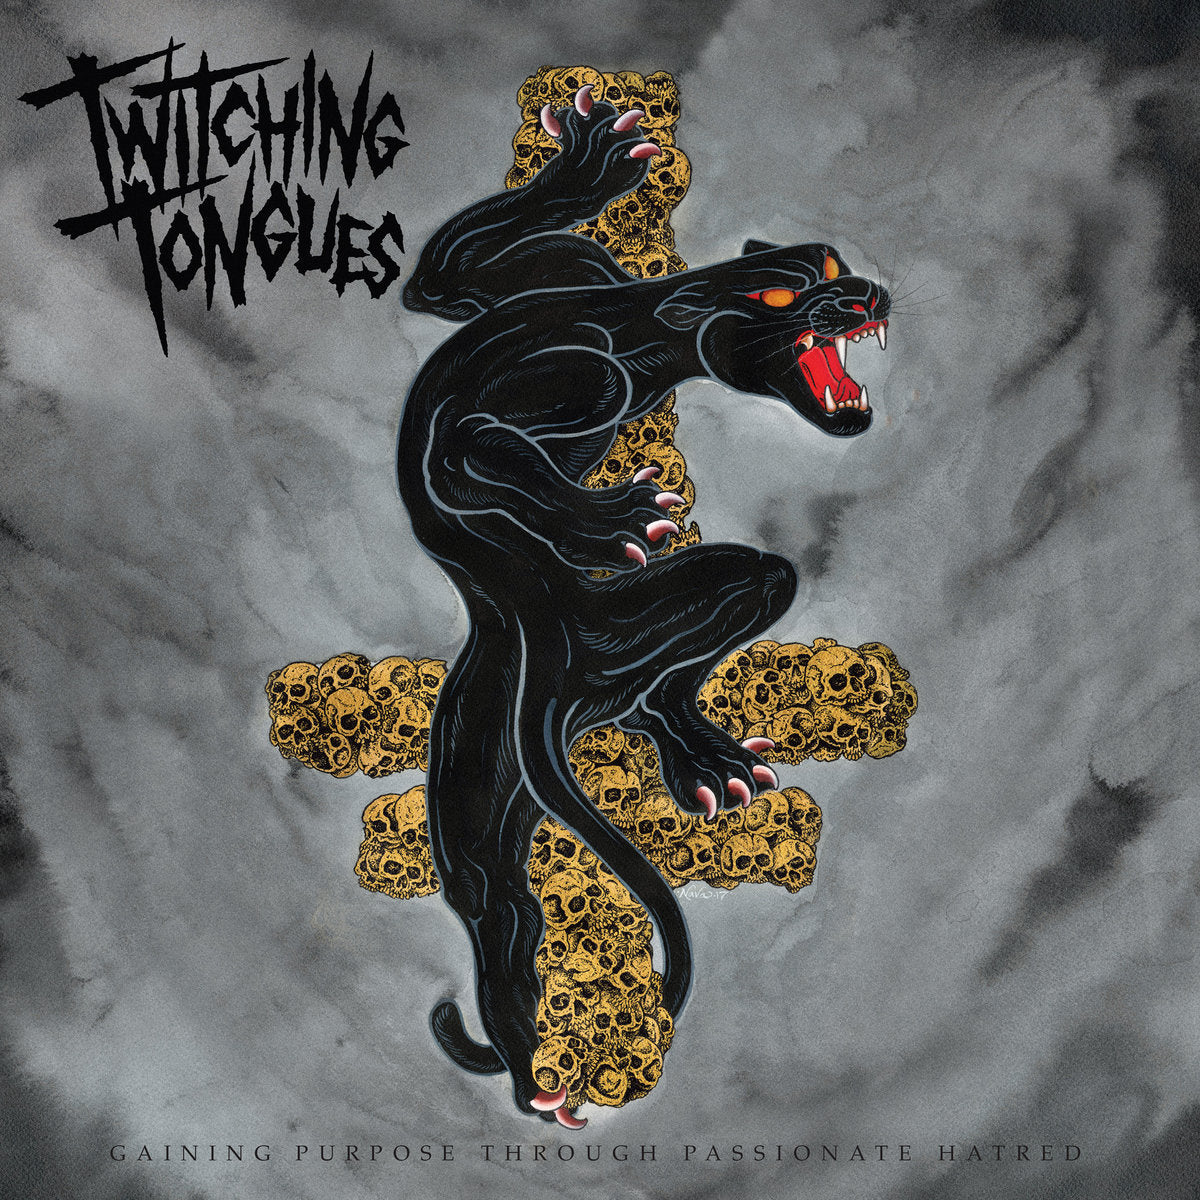 Twitching Tongues "Gaining Purpose Through Passionate Hatred" 12" Vinyl